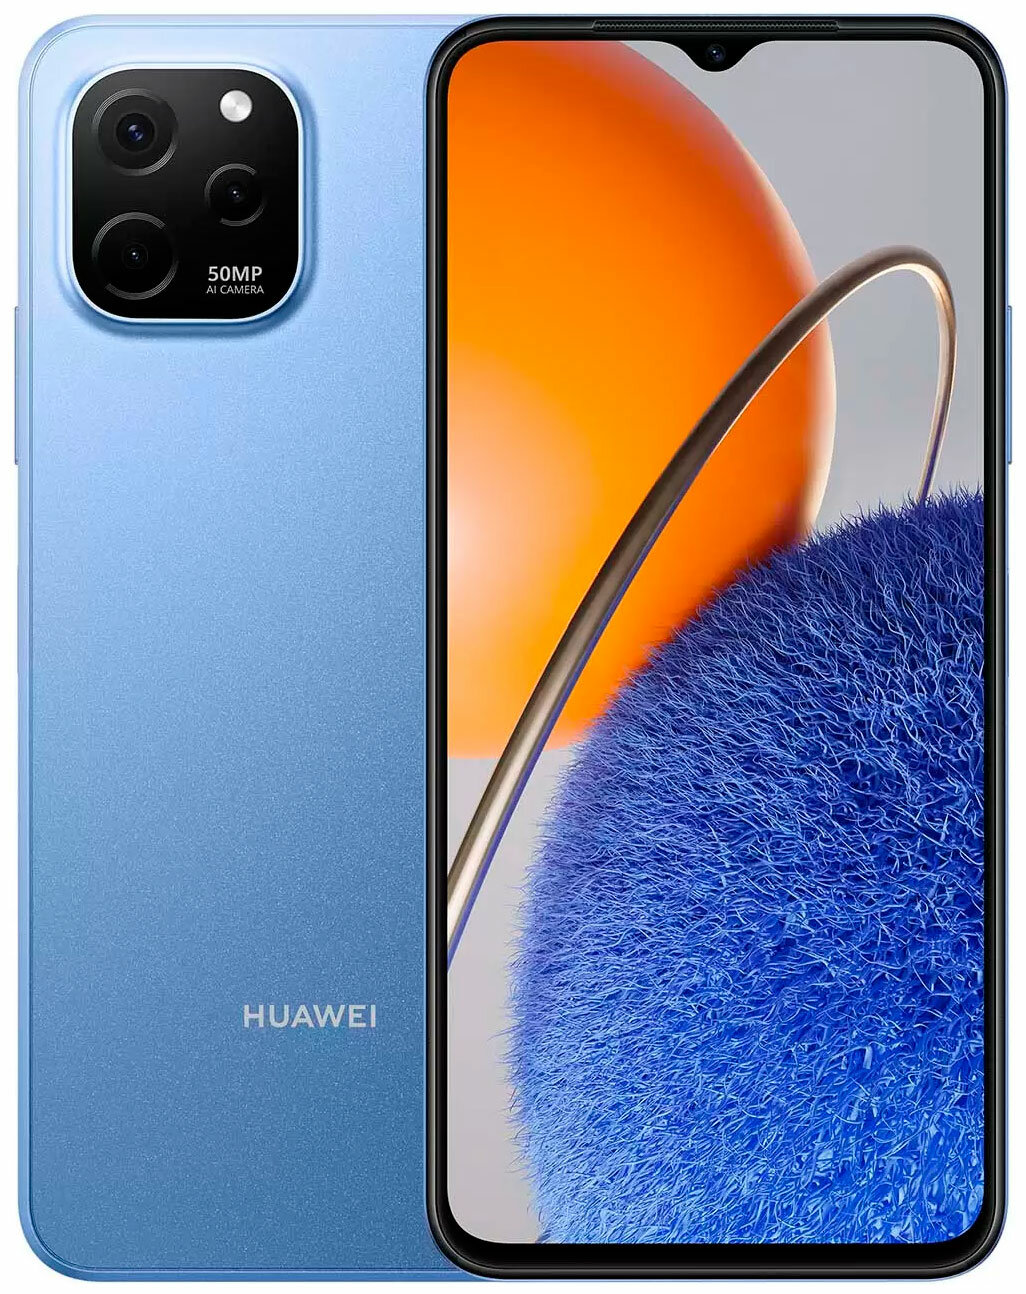 Смартфон Huawei NOVA Y61 EVE-LX9N Сапфировый синий